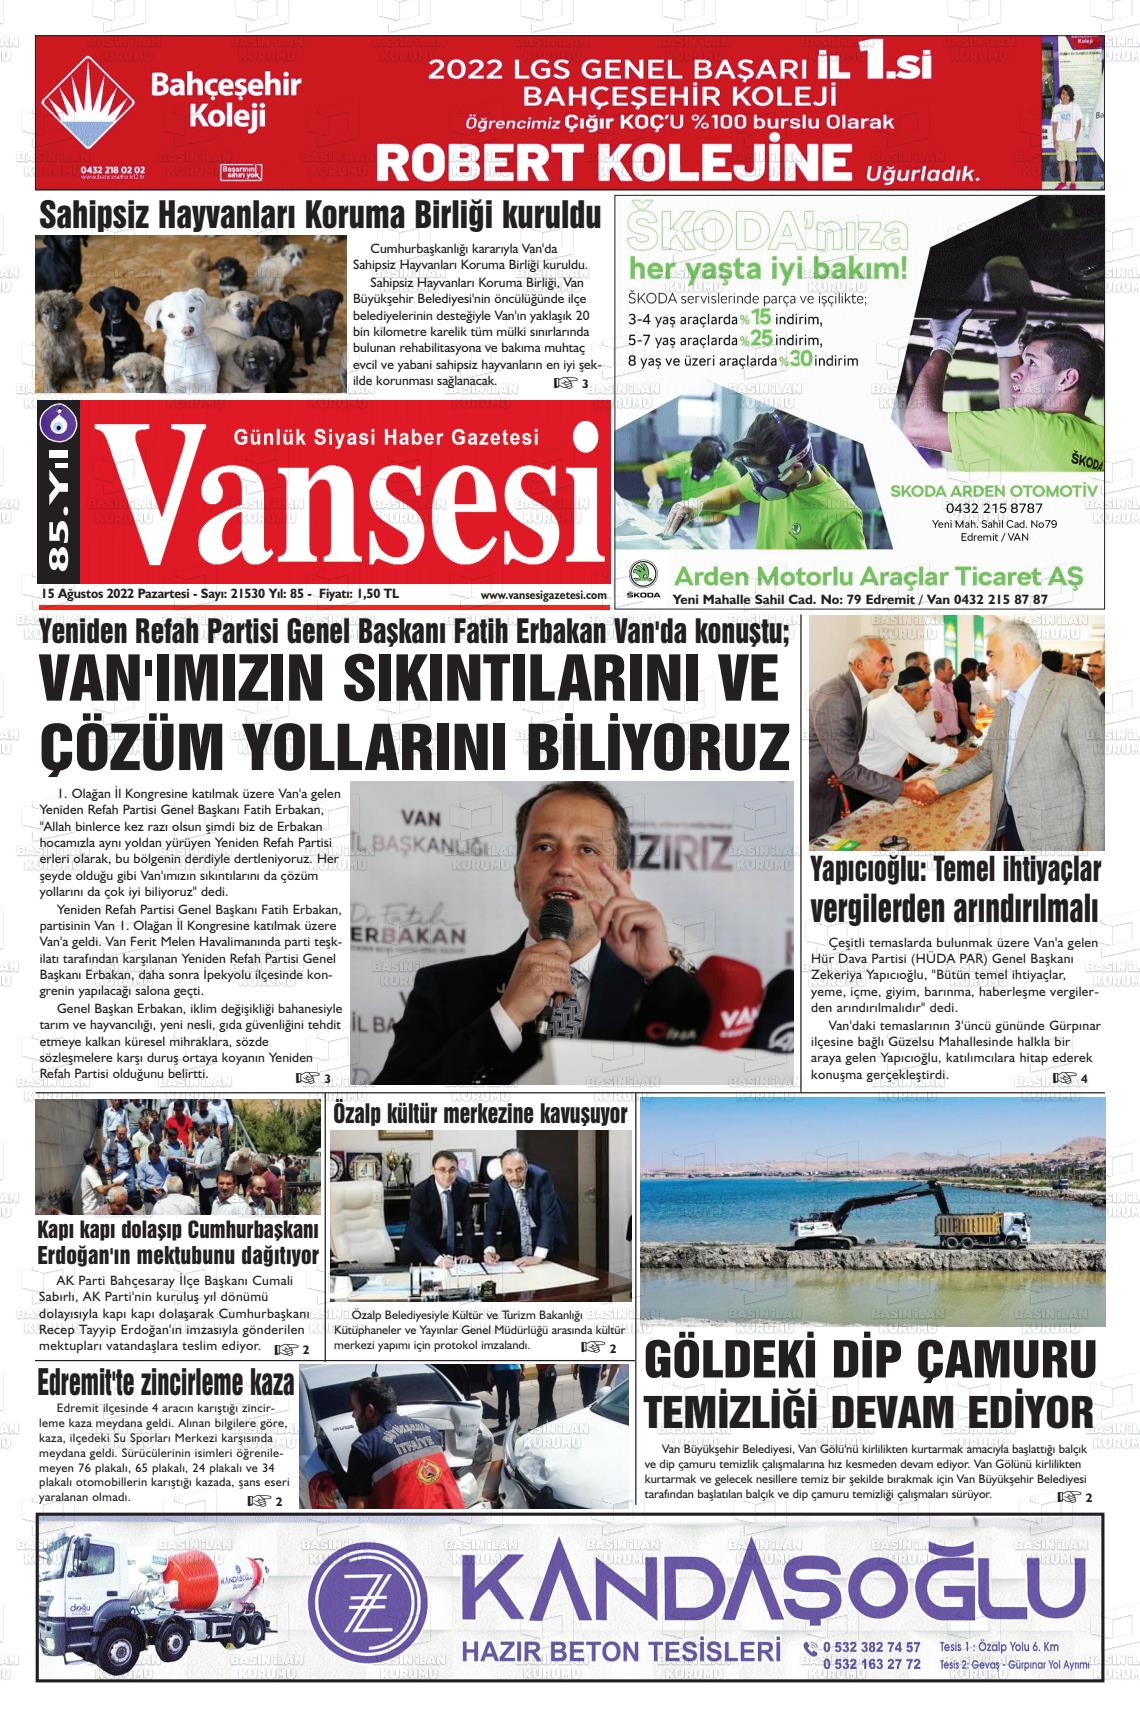 15 Ağustos 2022 Vansesi Gazete Manşeti